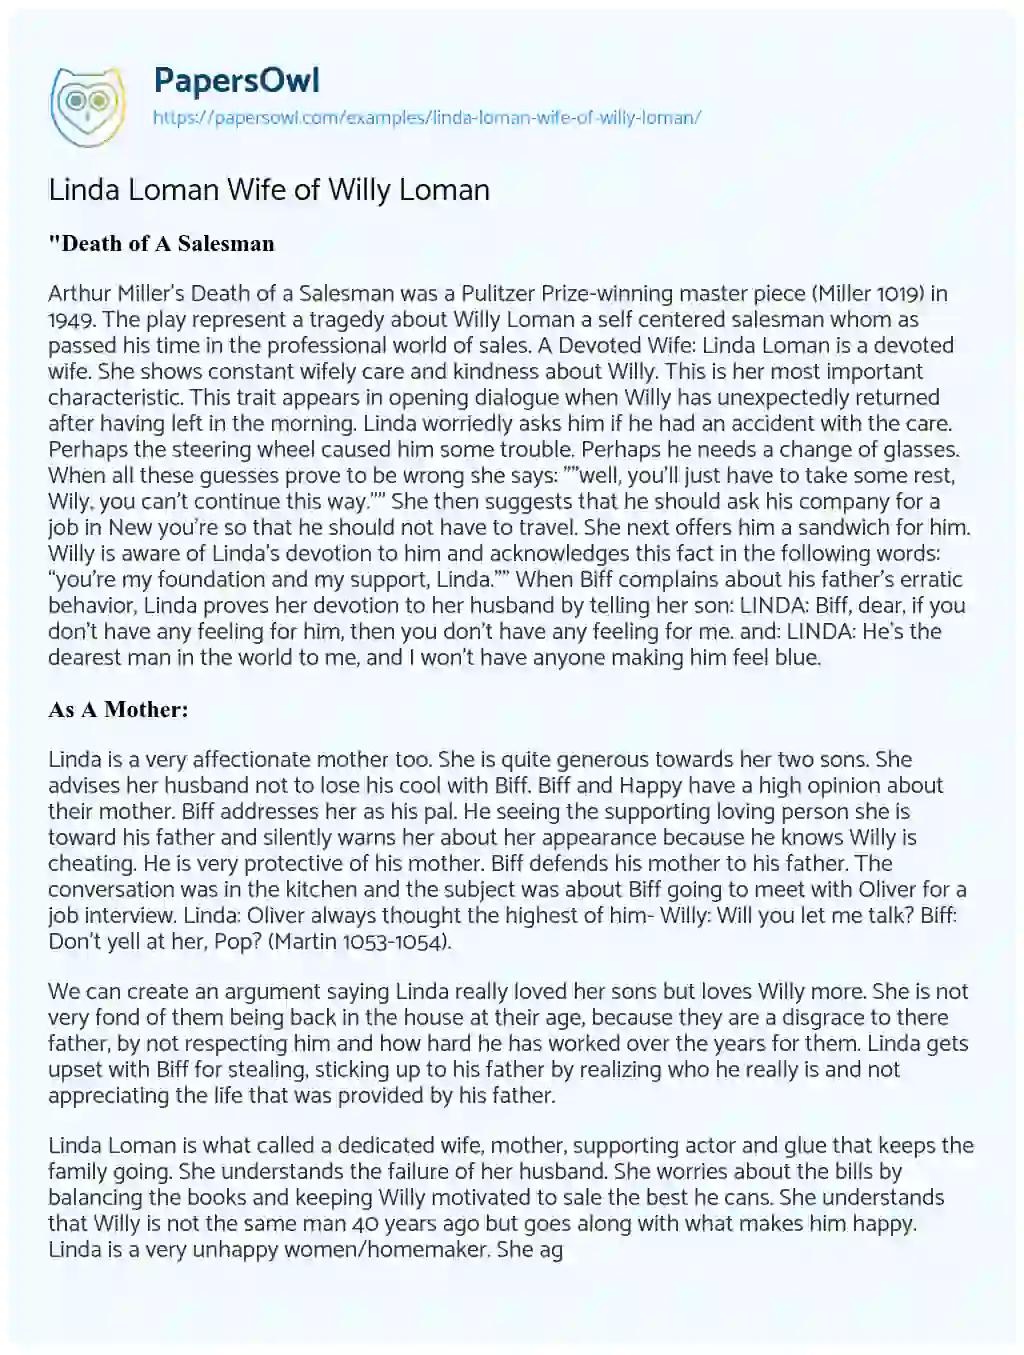 Linda Loman Wife of Willy Loman essay